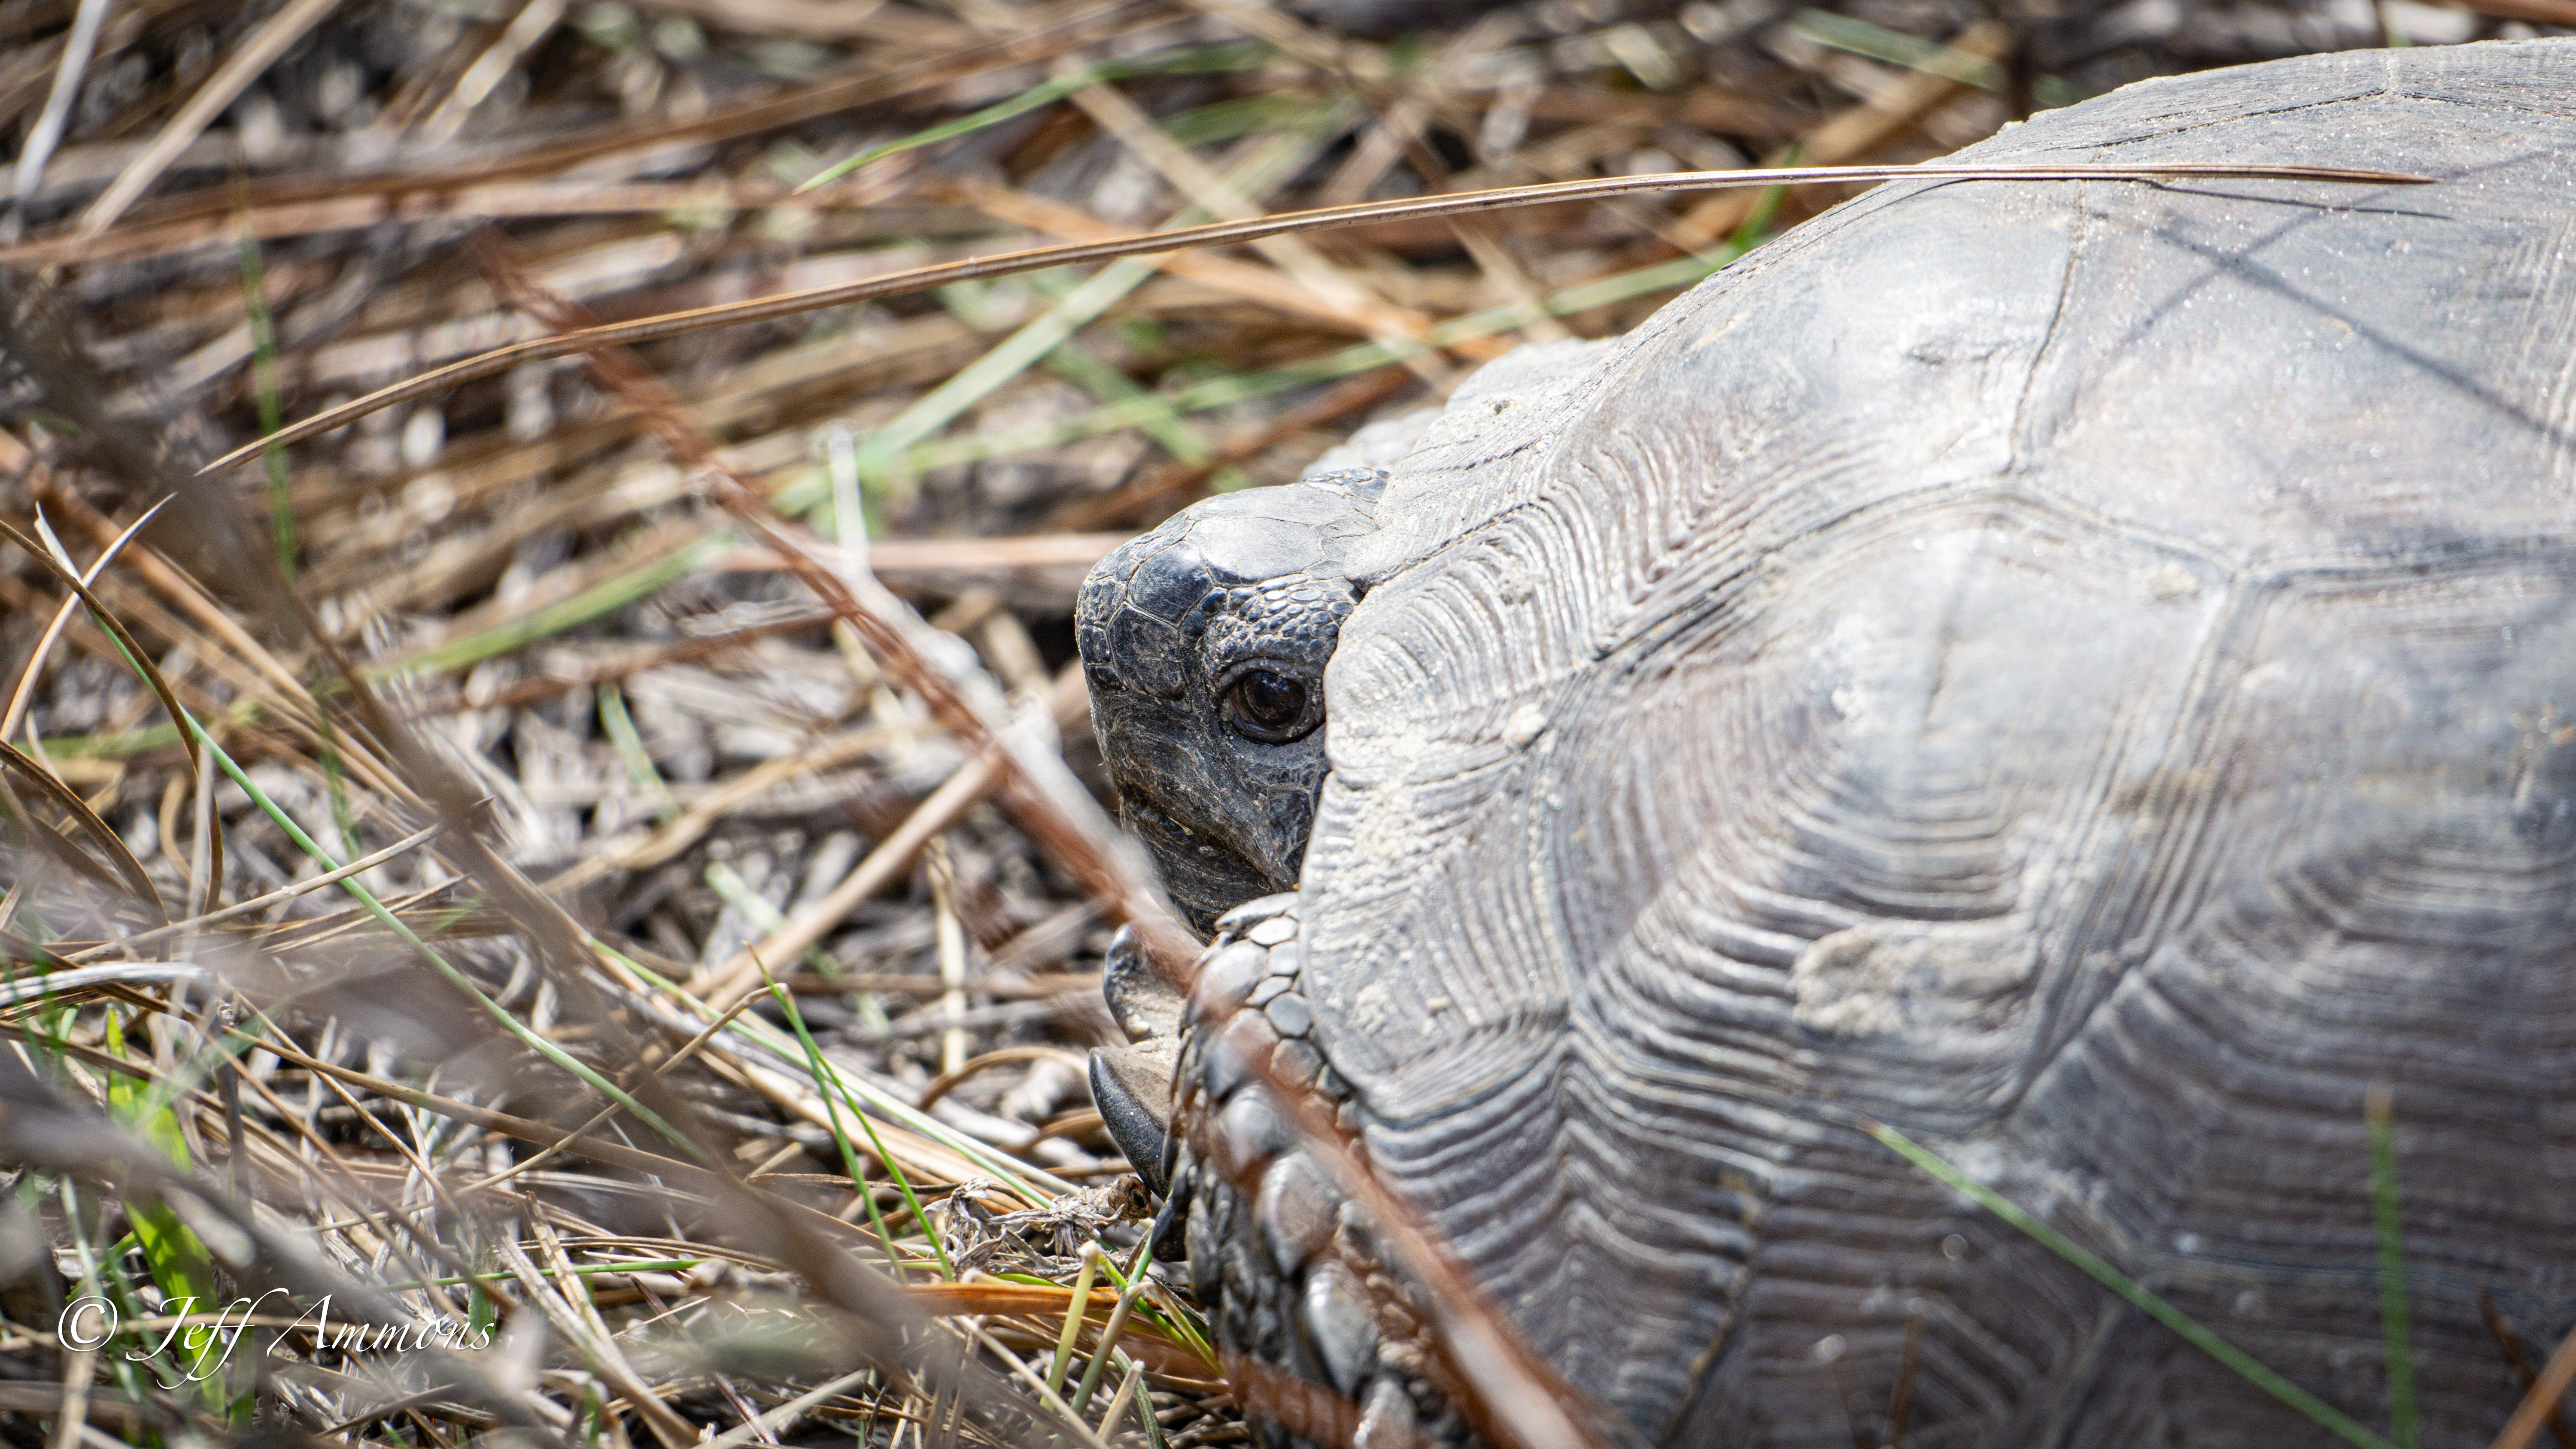 Close-Up of Tortoise